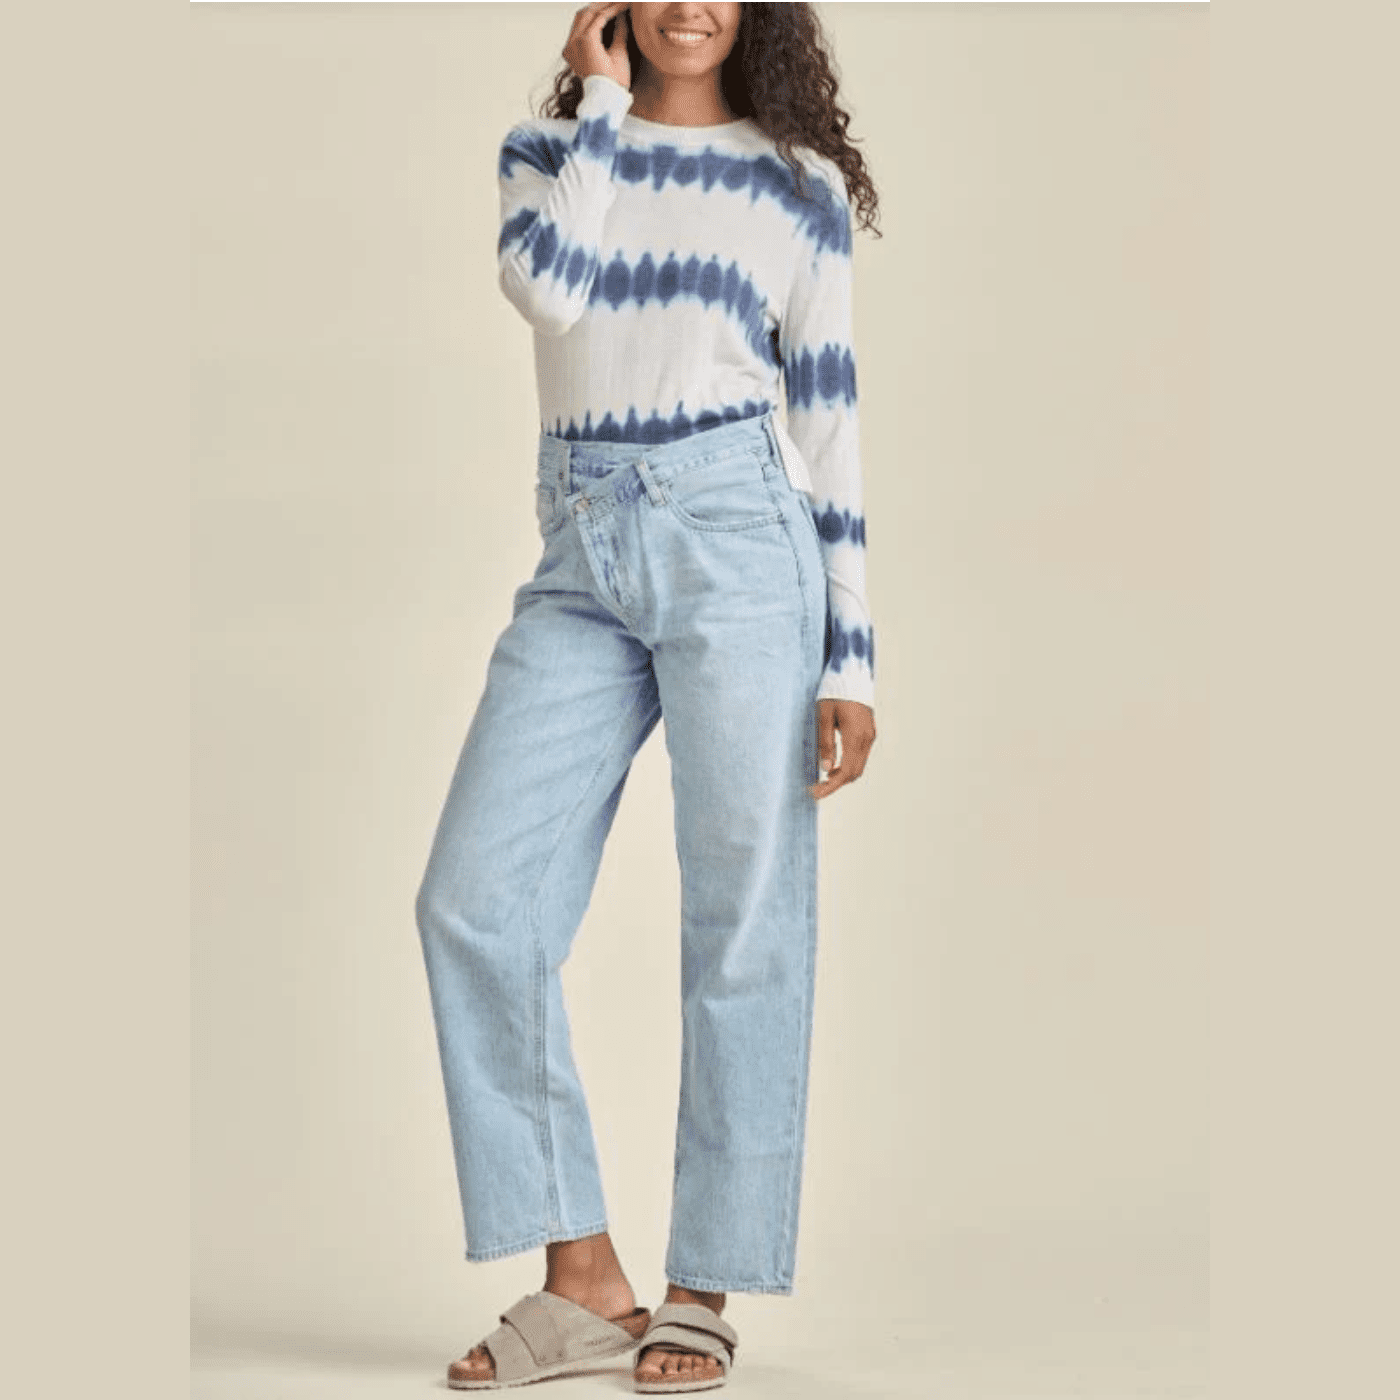 Splendid Madelyn Shibori Sweater in Navy - Jaunts Boutique 